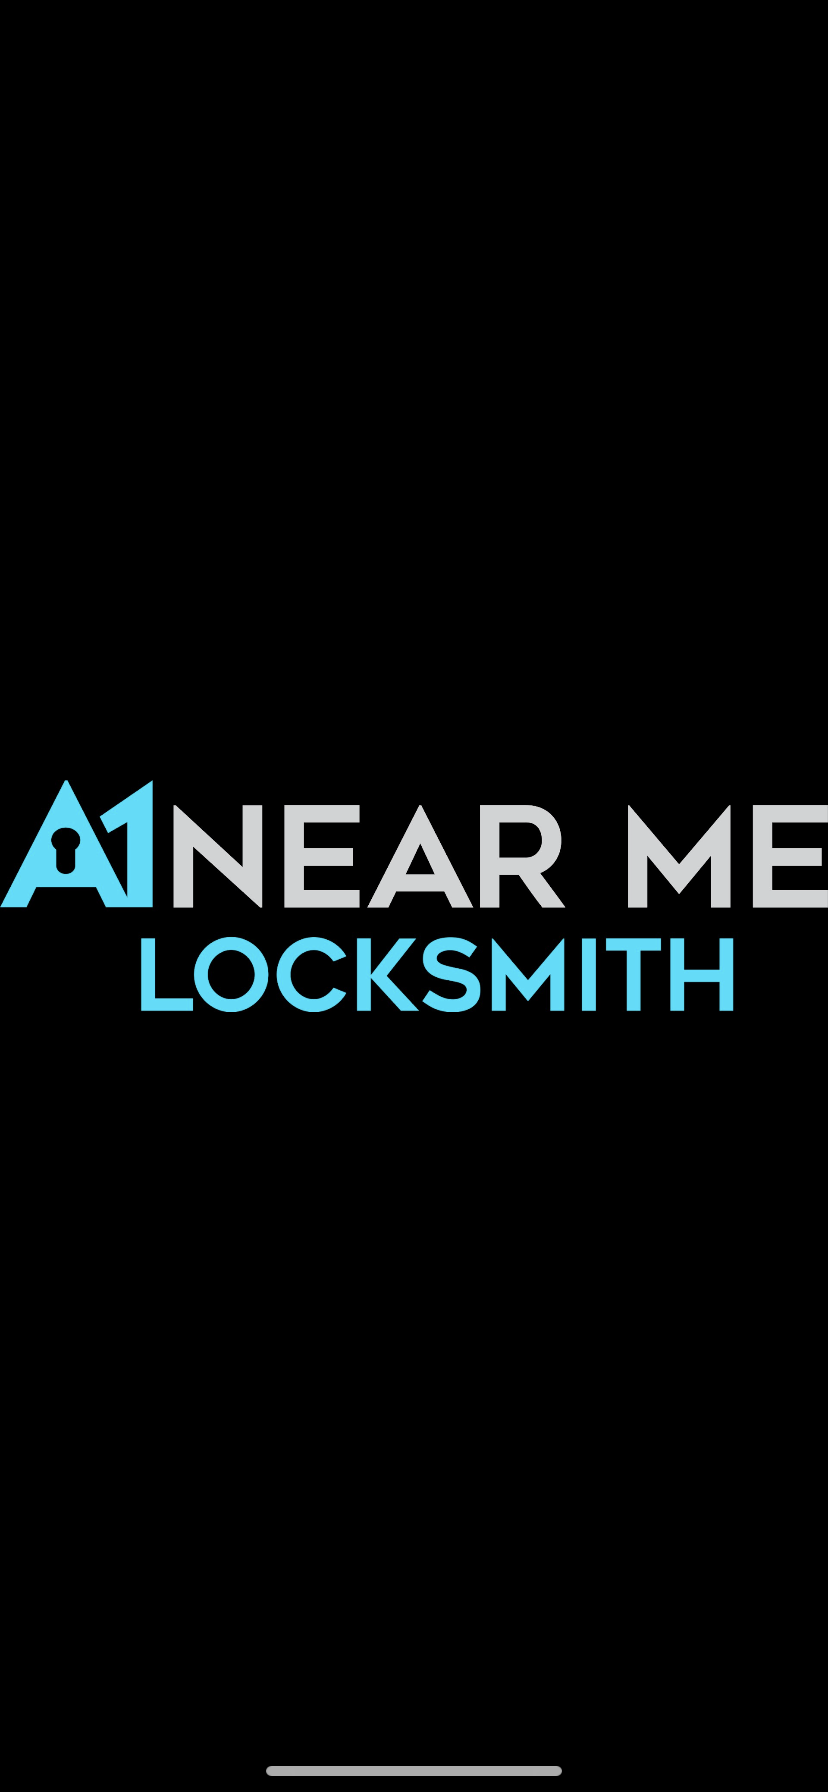 A1 Near Me Locksmith's Logo